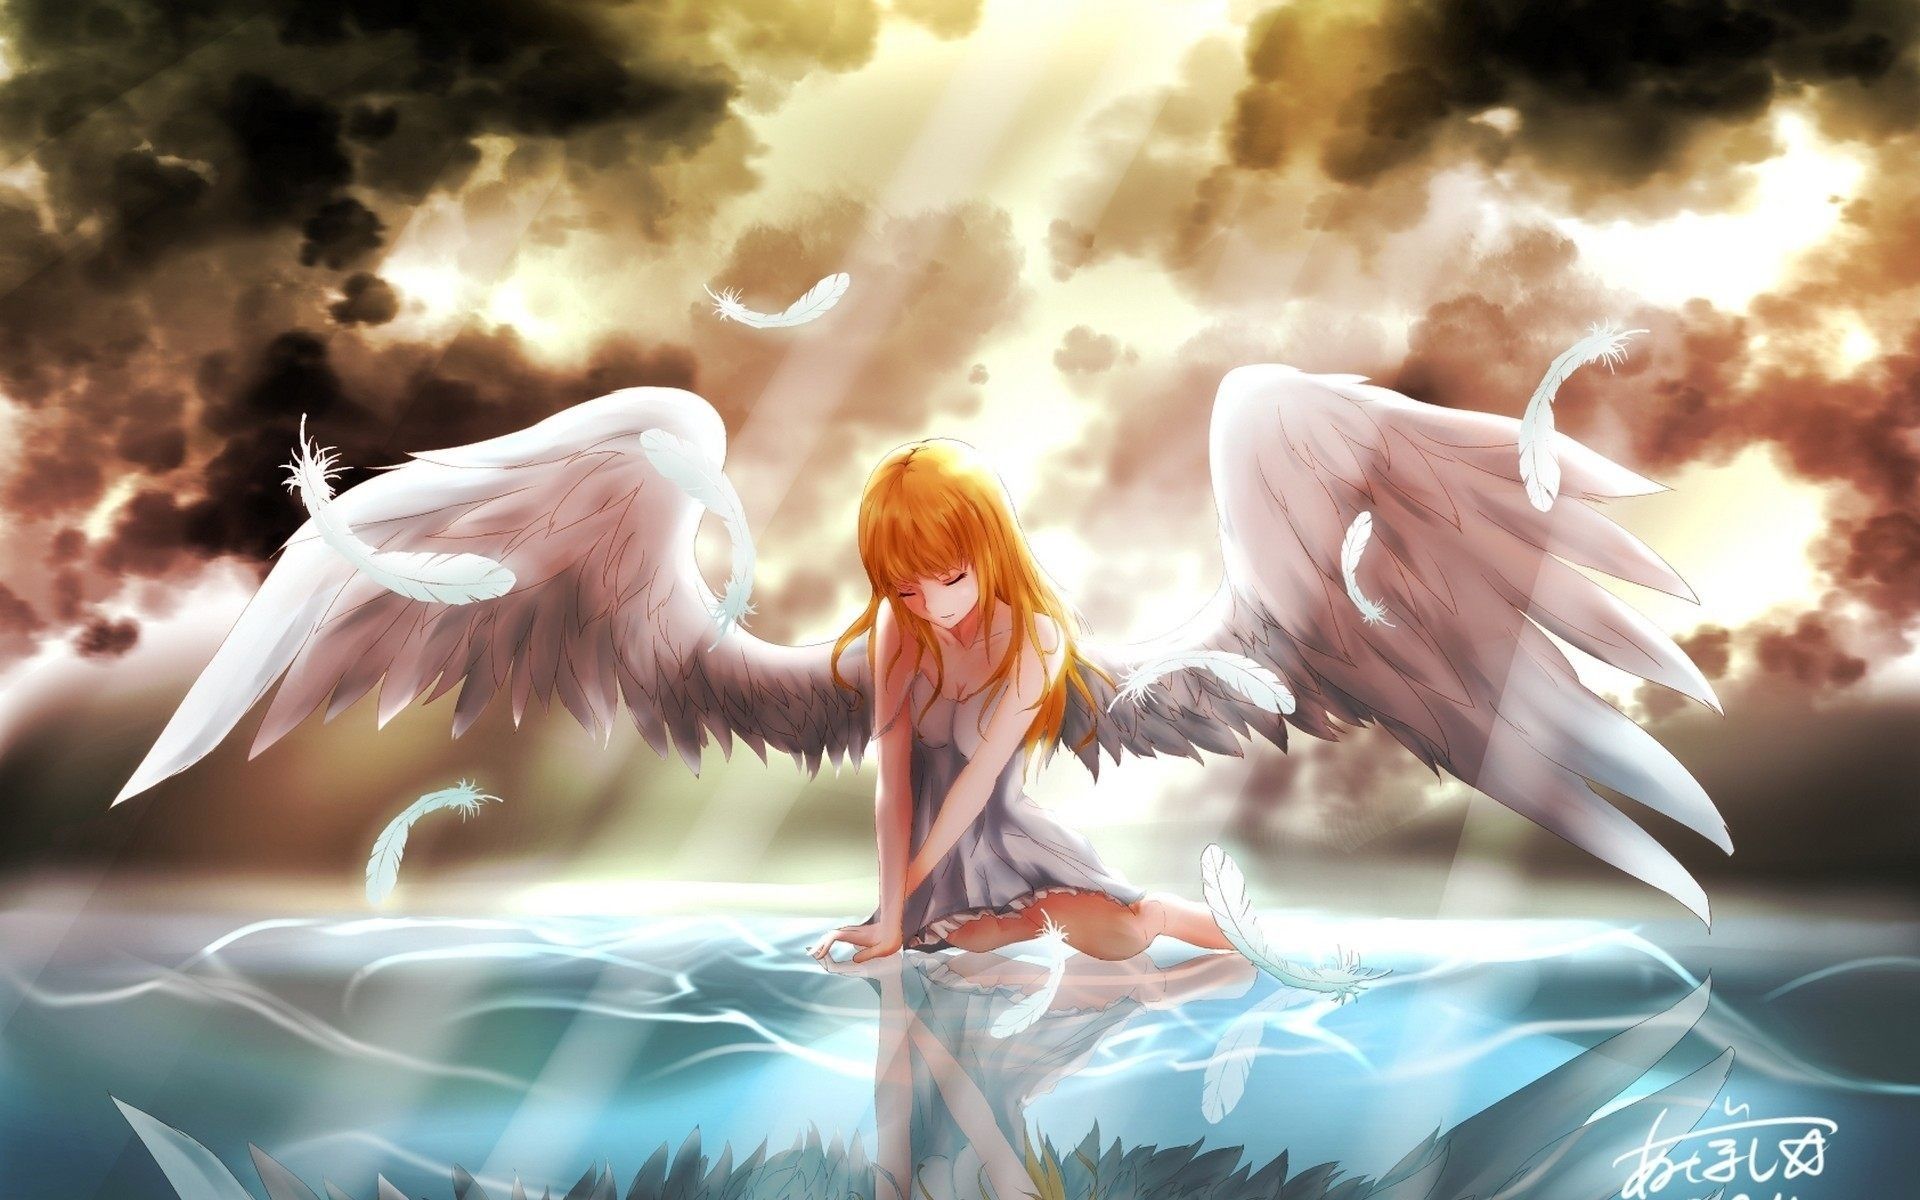 Anime Angel Wallpaper Background. Anime angel girl, Anime angel, Angel wallpaper